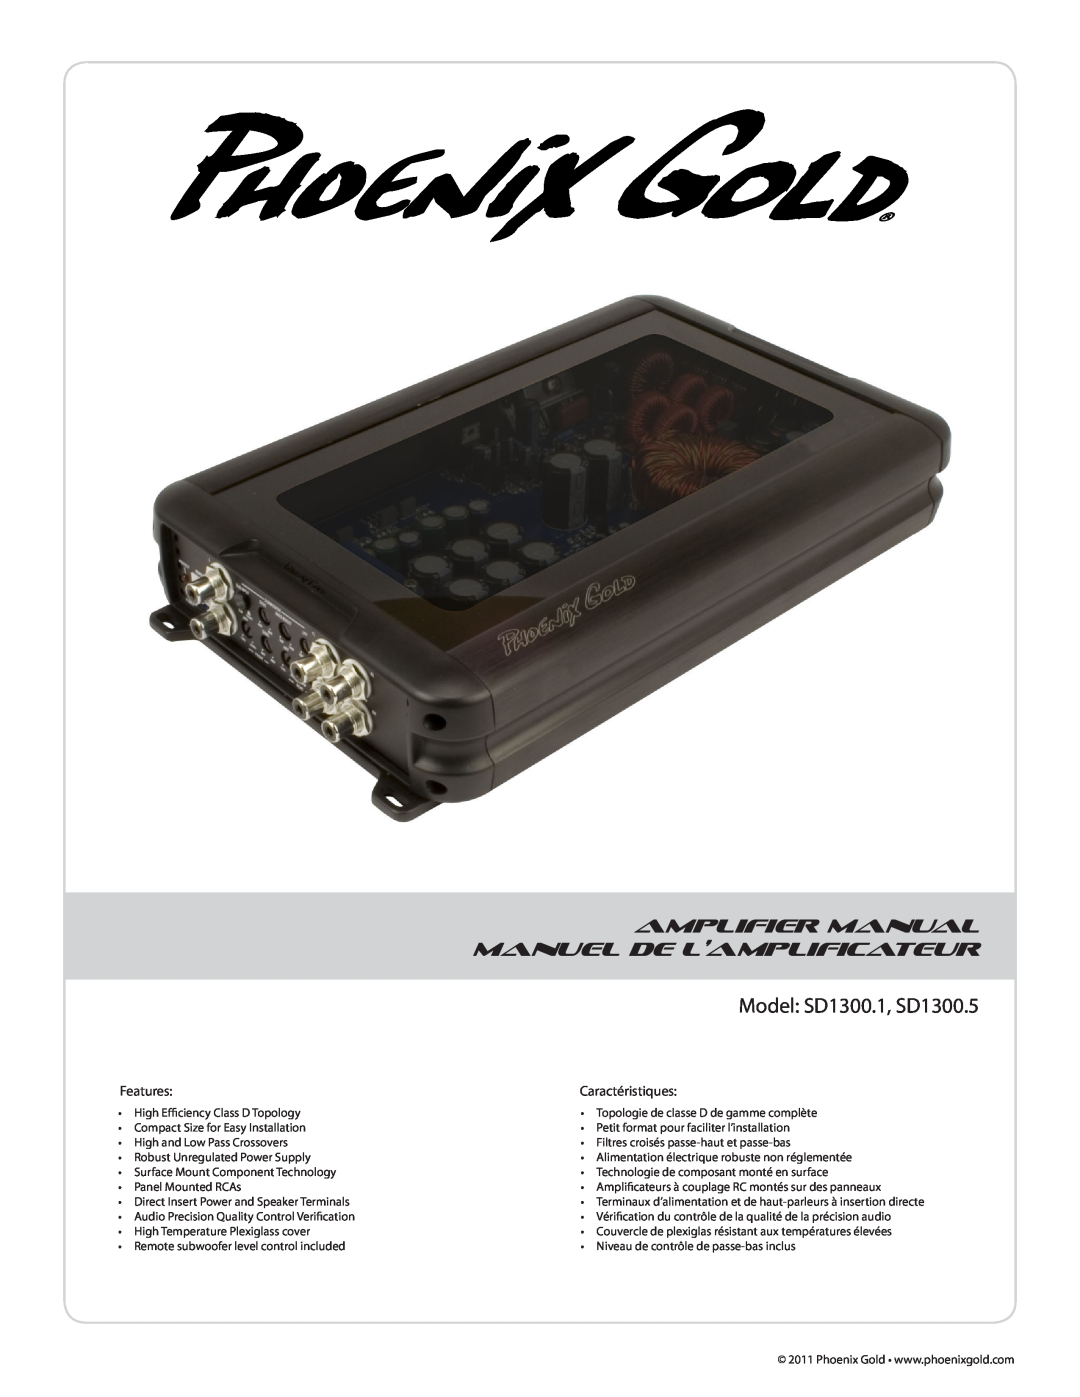 Phoenix Gold manual Amplifier Manual Manuel De L’Amplificateur, Model SD1300.1, SD1300.5 